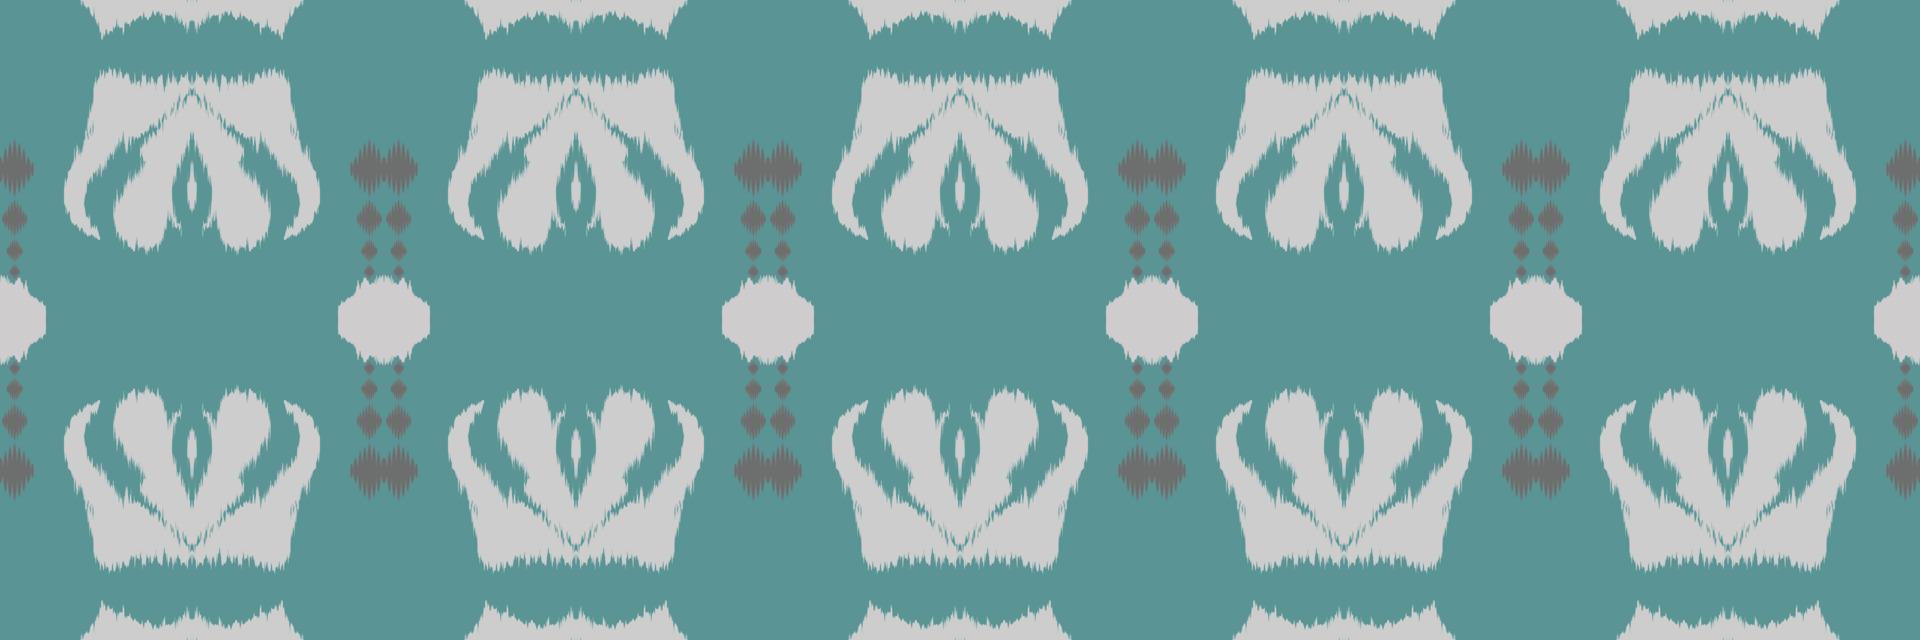 ikat imprime batik textil patrón sin costuras diseño de vector digital para imprimir saree kurti borneo borde de tela símbolos de pincel muestras de algodón